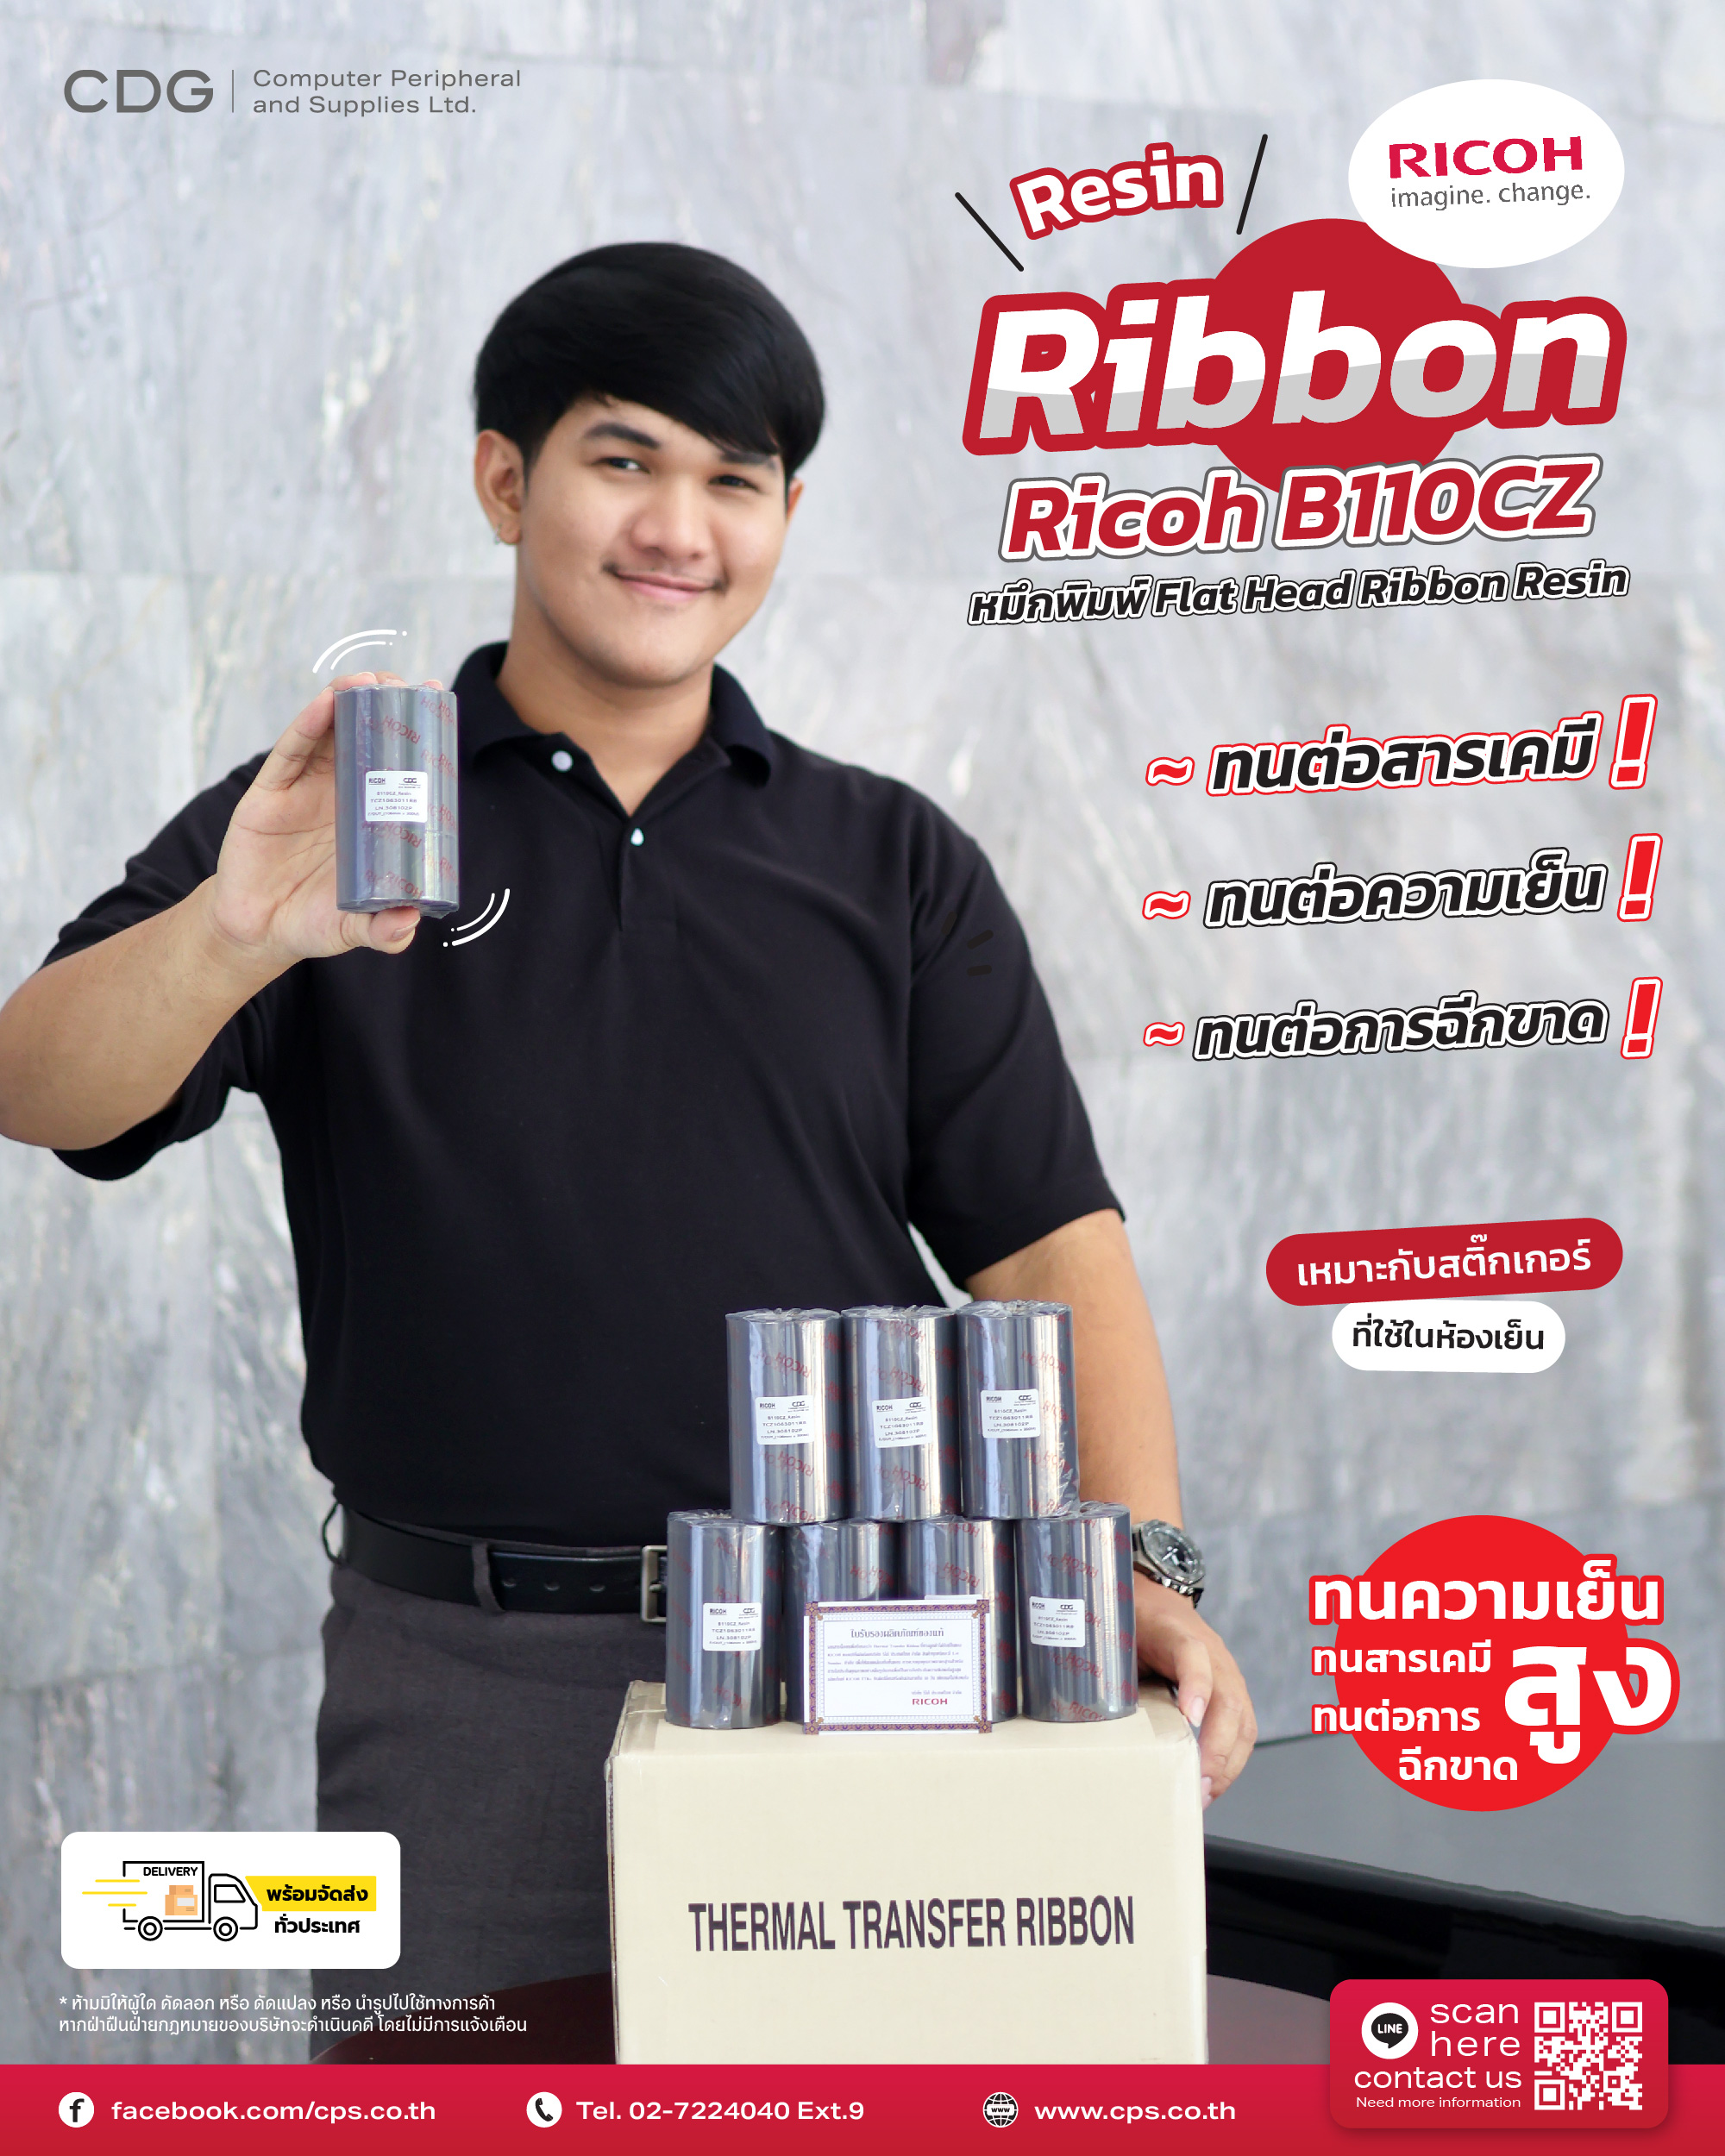 Ribbon Resin Ricoh B110CZ